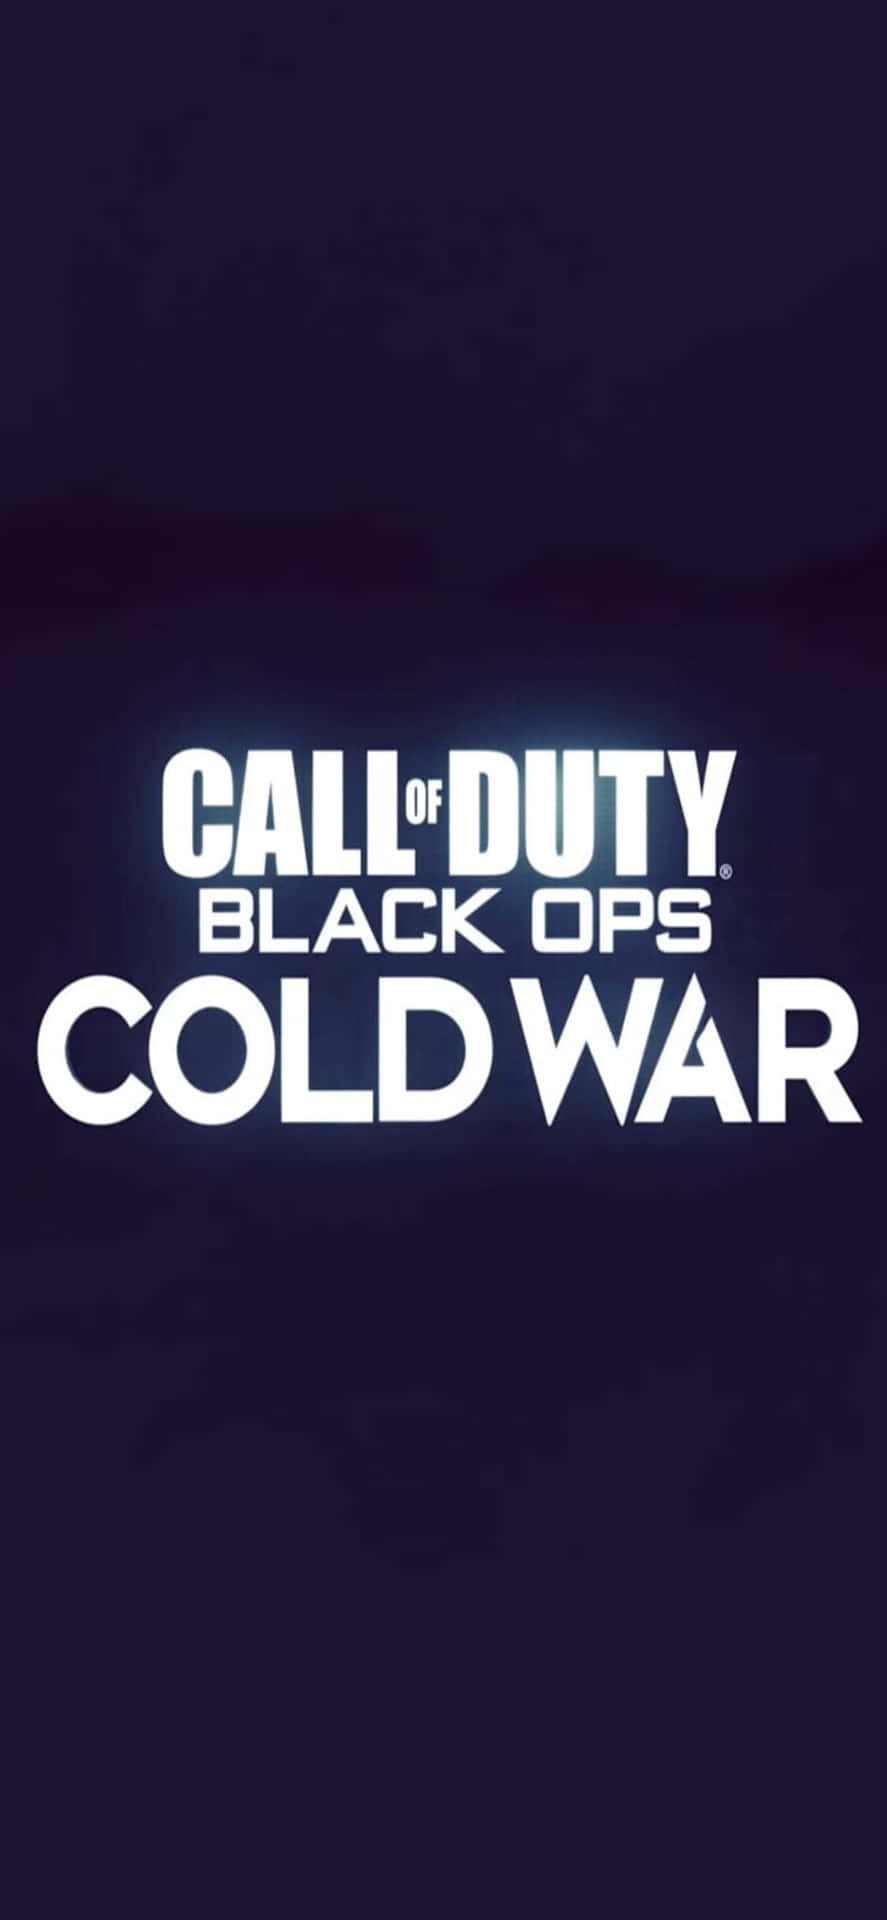 Iphonexs Bakgrund Med Call Of Duty Black Ops Cold War Logotypen I Vektor.